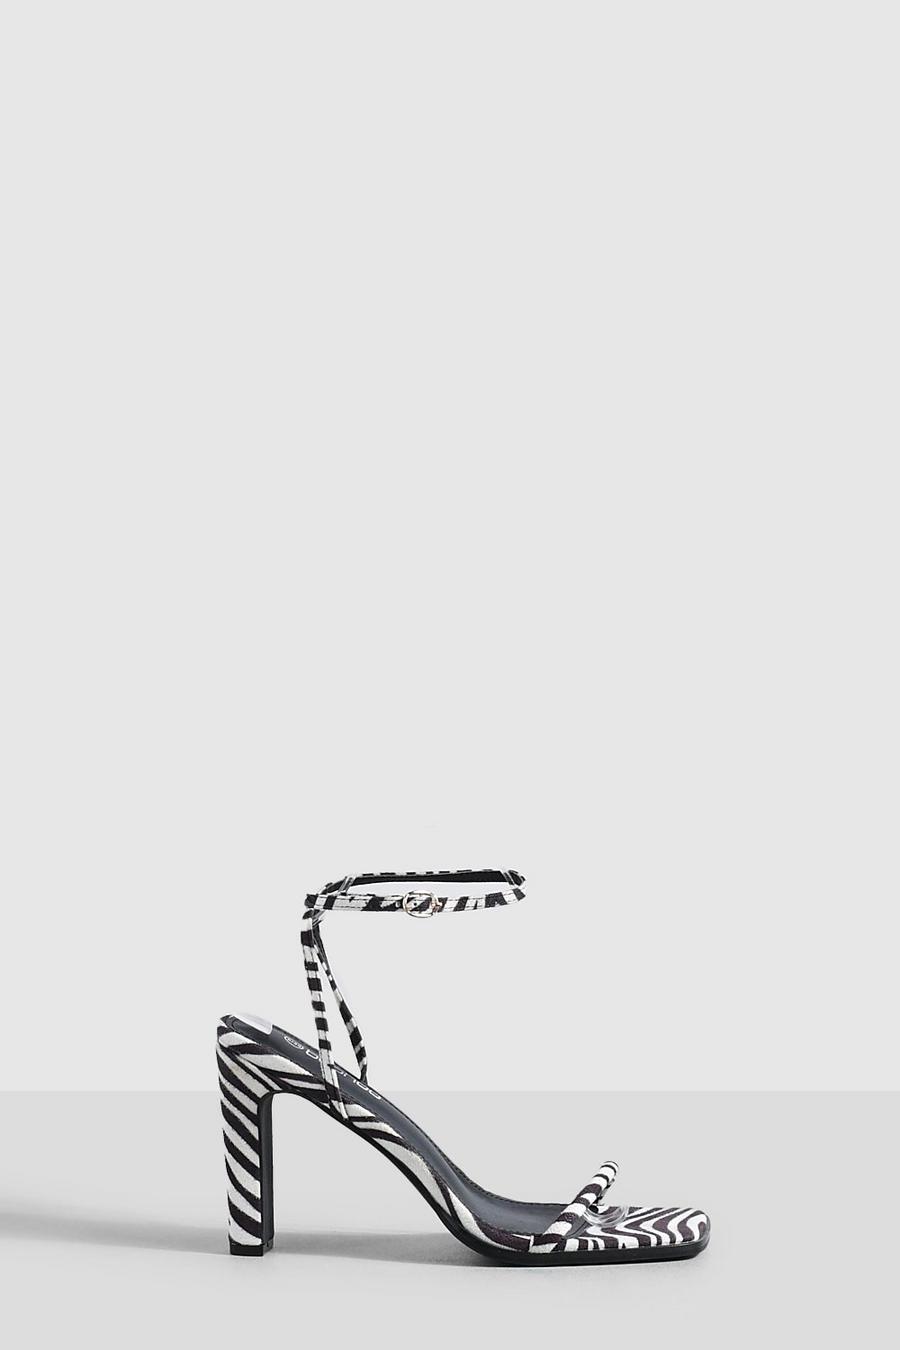 Chaussures minimalistes, Zebra